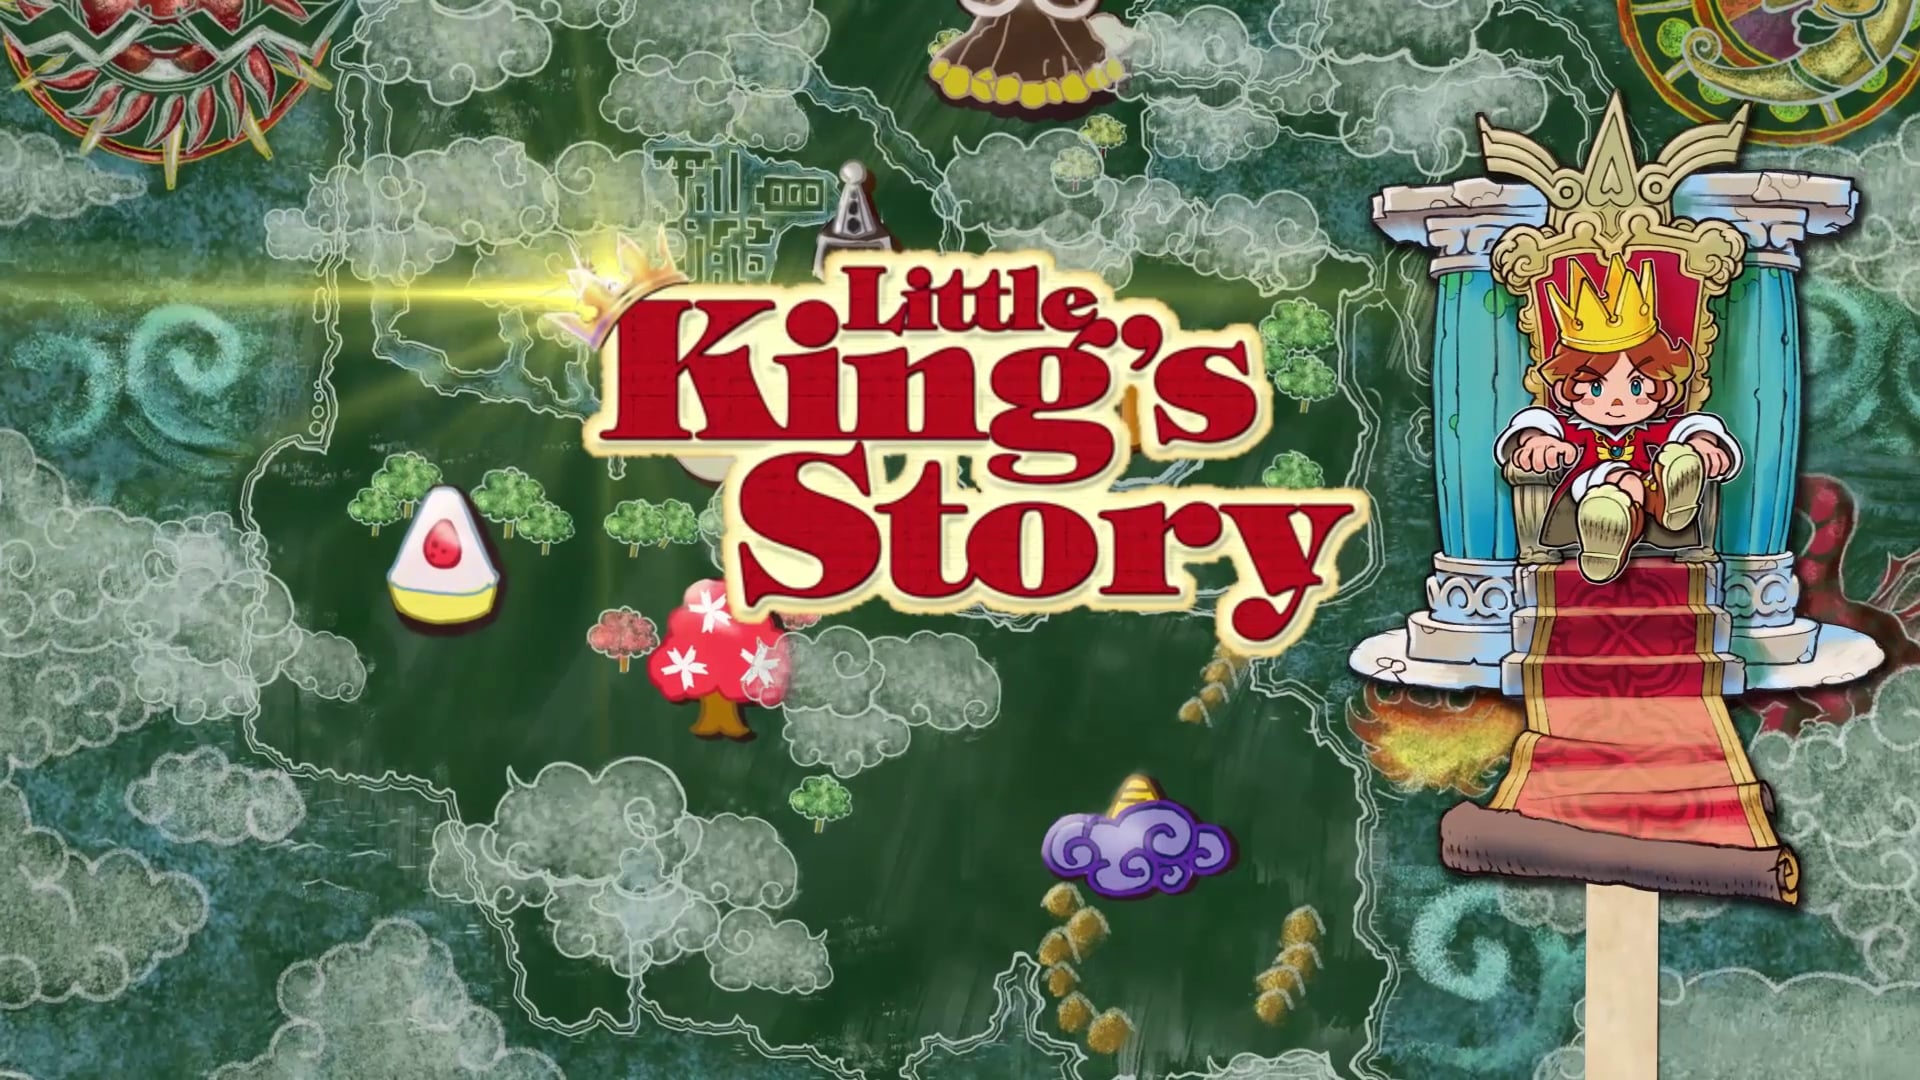 Игры похожие на leaves. Игра stories World. King story. Little King. Little King's story Wii.